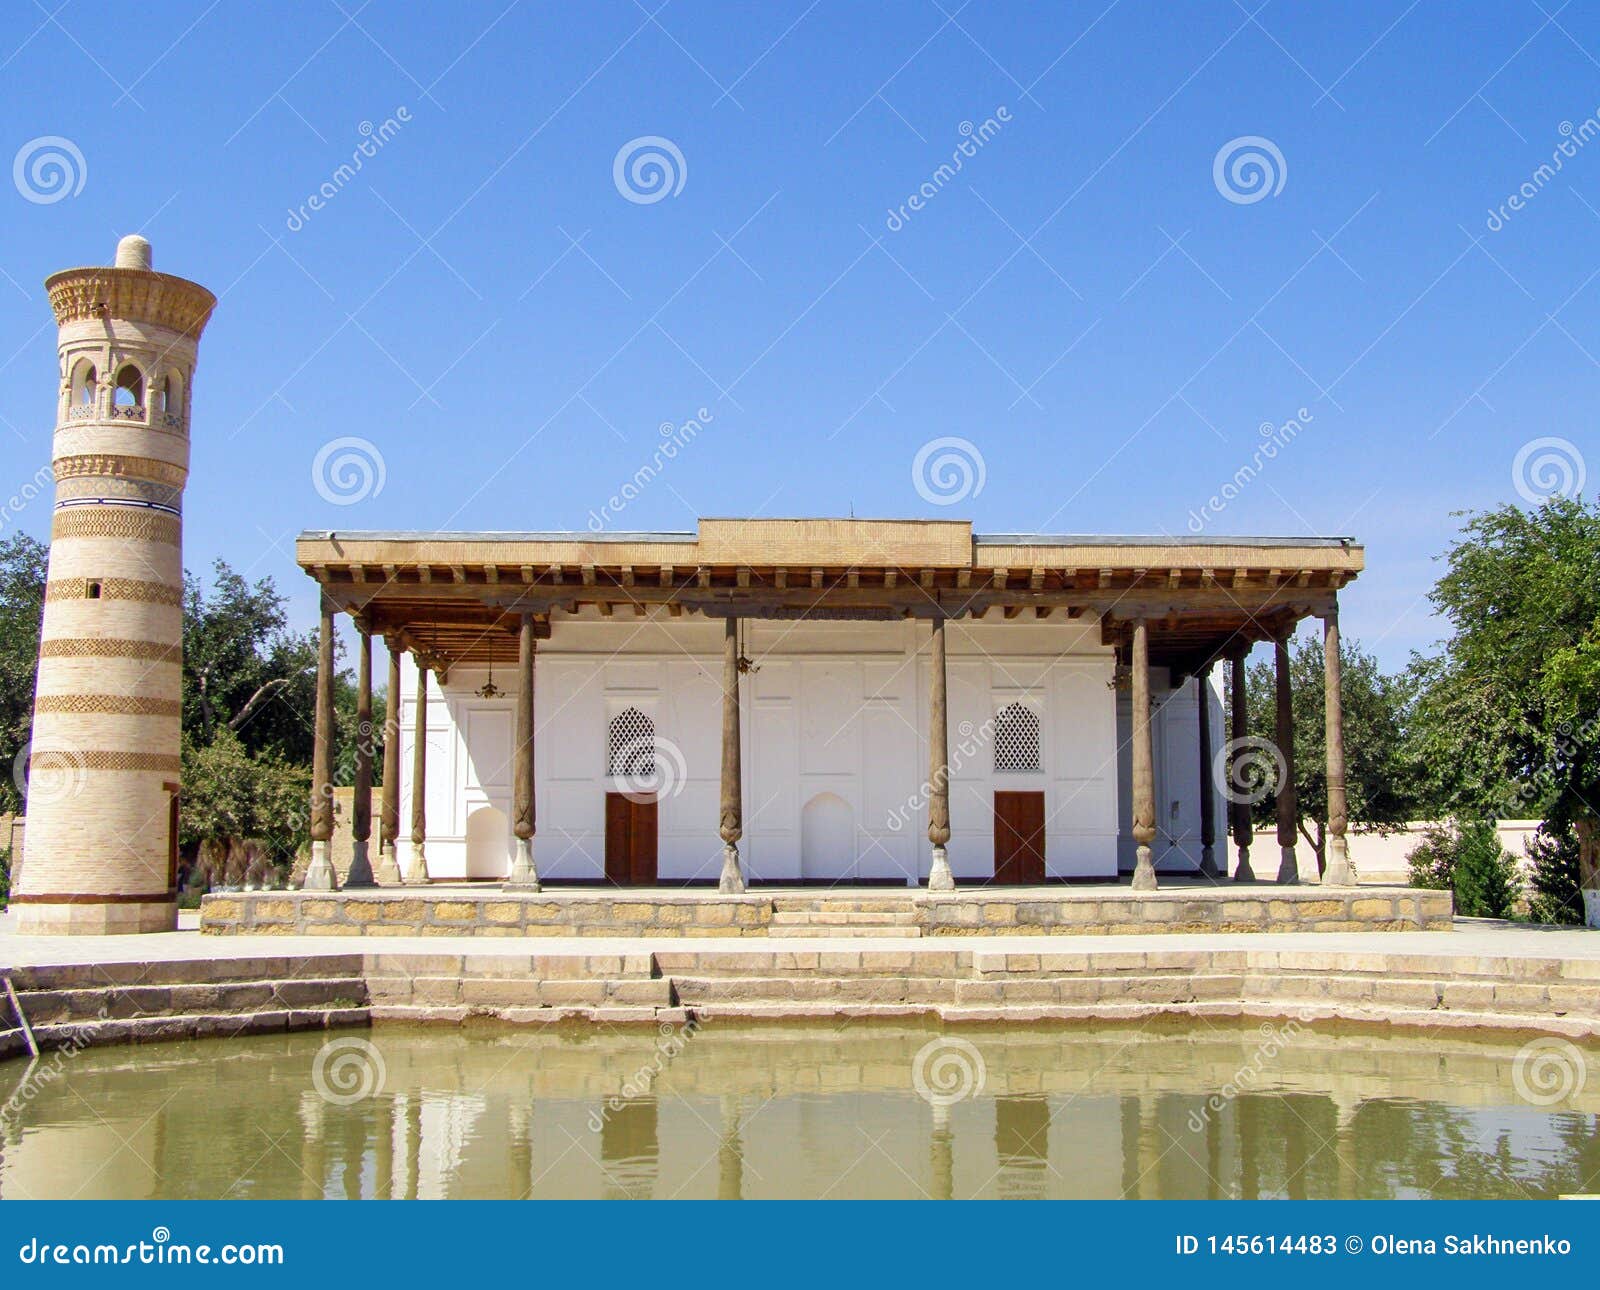 bukhara, uzbekistan - august 10 2018: the memorial complex of bahauddin naqshbandi is a center of pilgrimage as it was worshipped